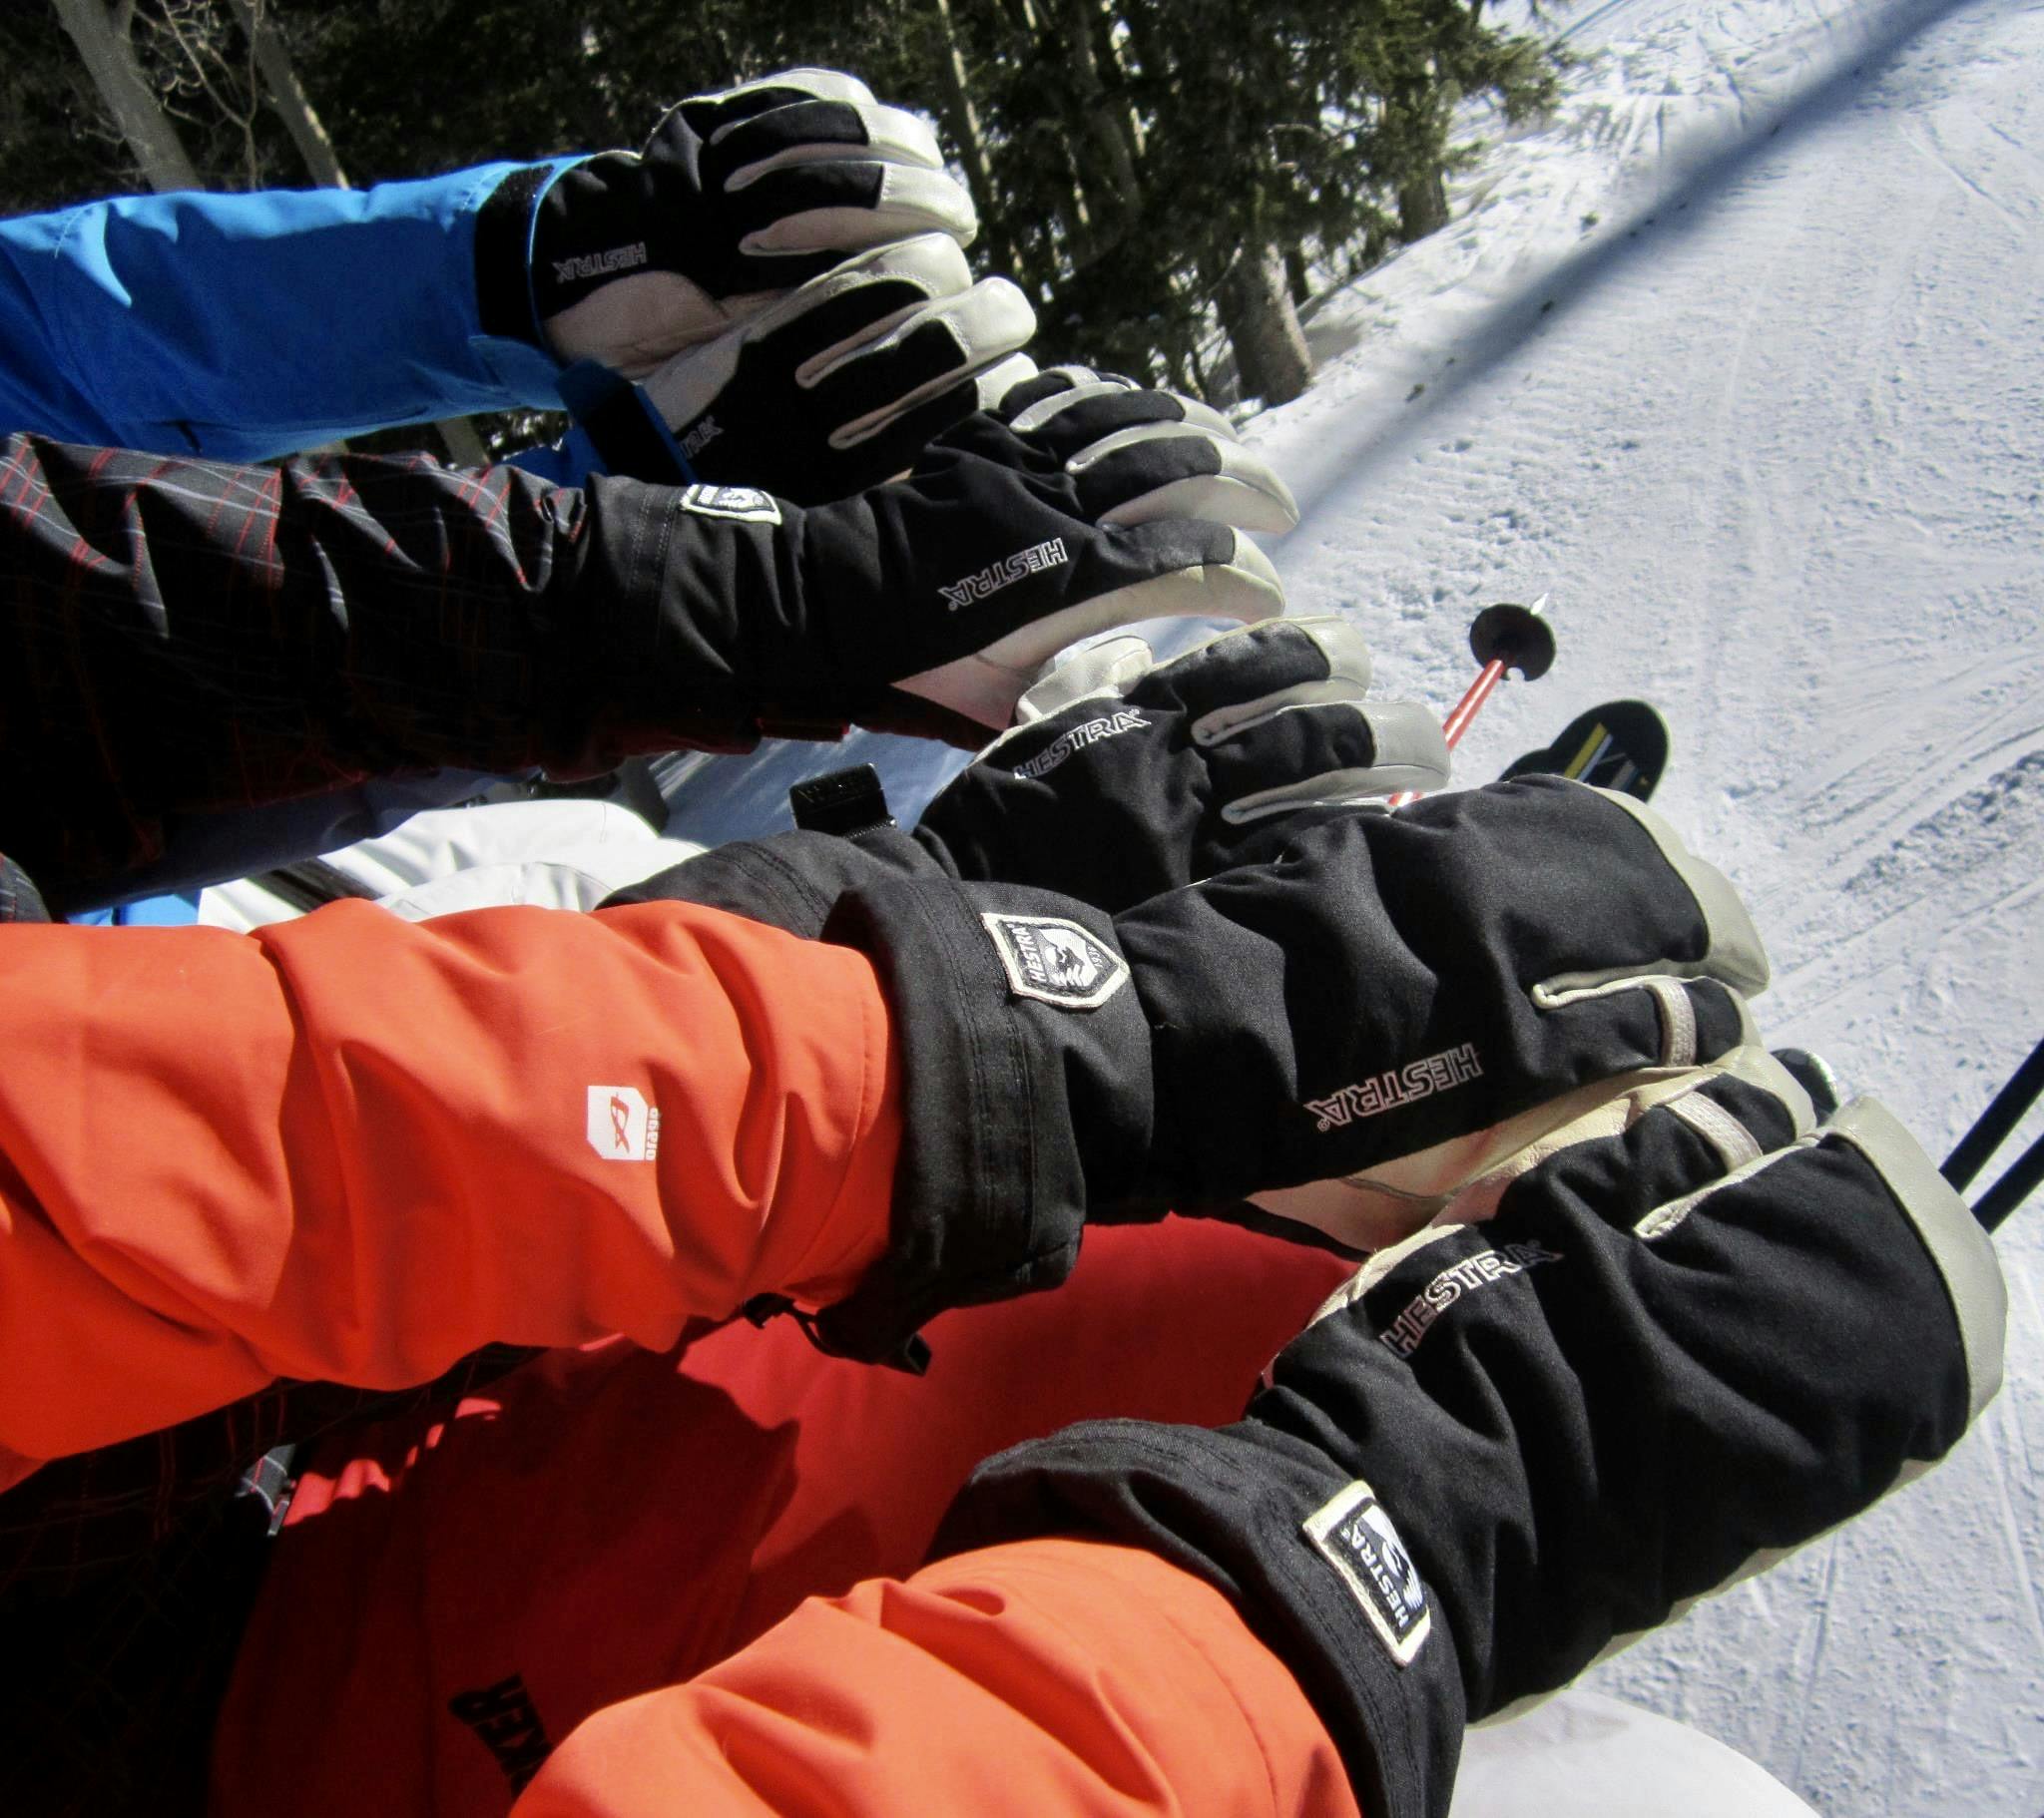 The Hestra Army Leather Heli Ski Gloves on a ski lift.